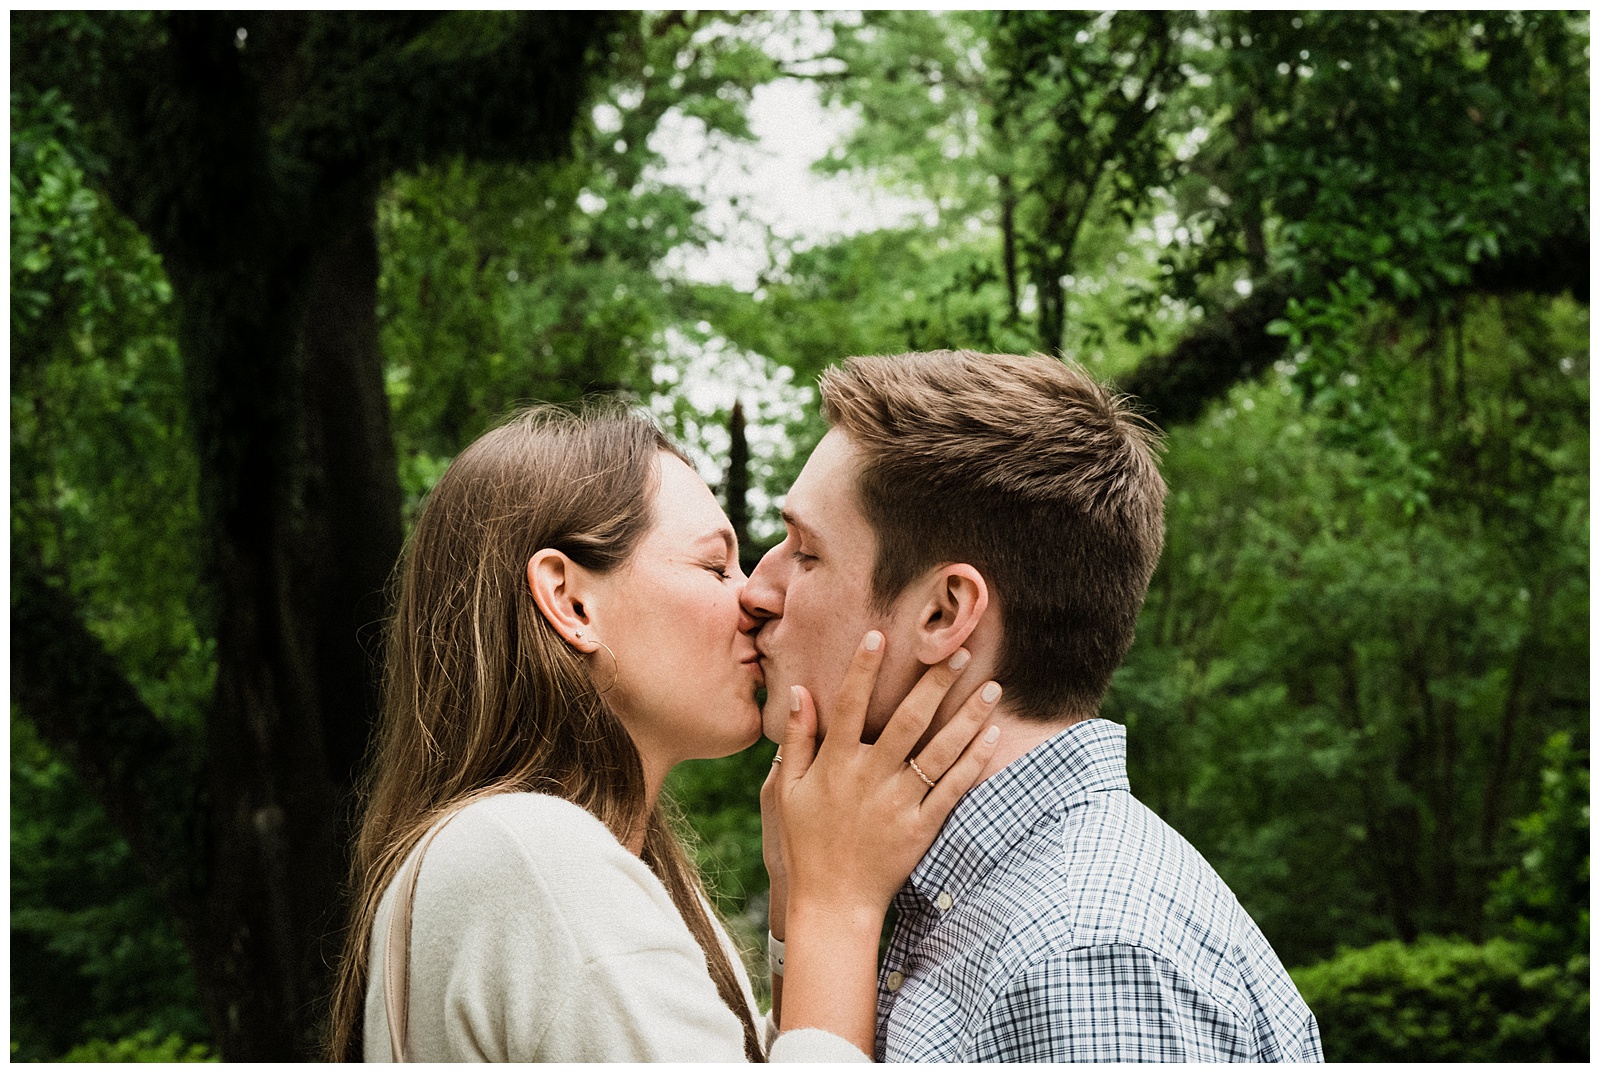 Newly engaged couple kisses